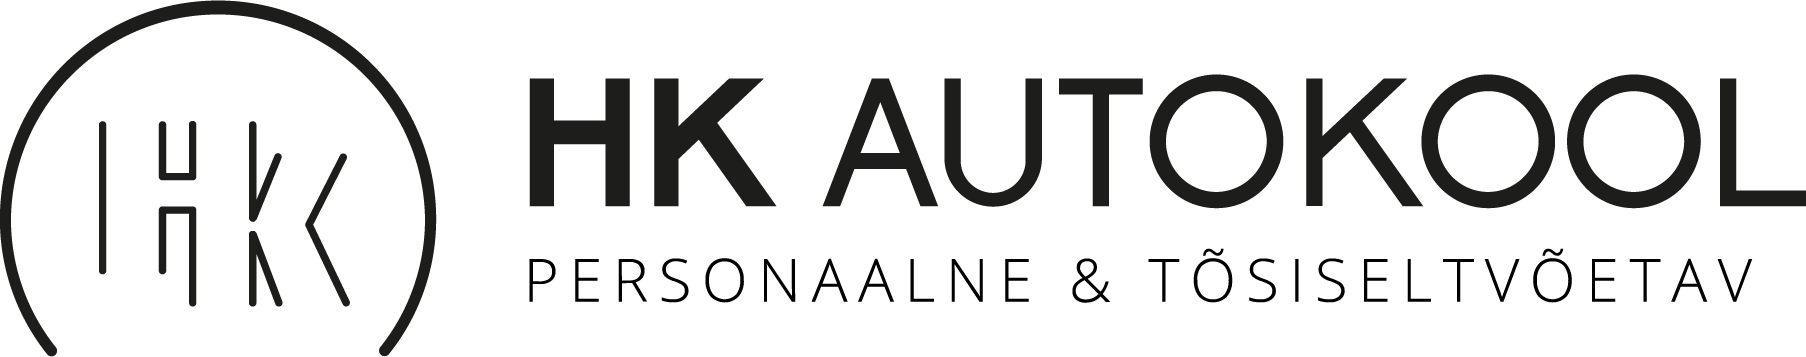 HK Autokool Logo